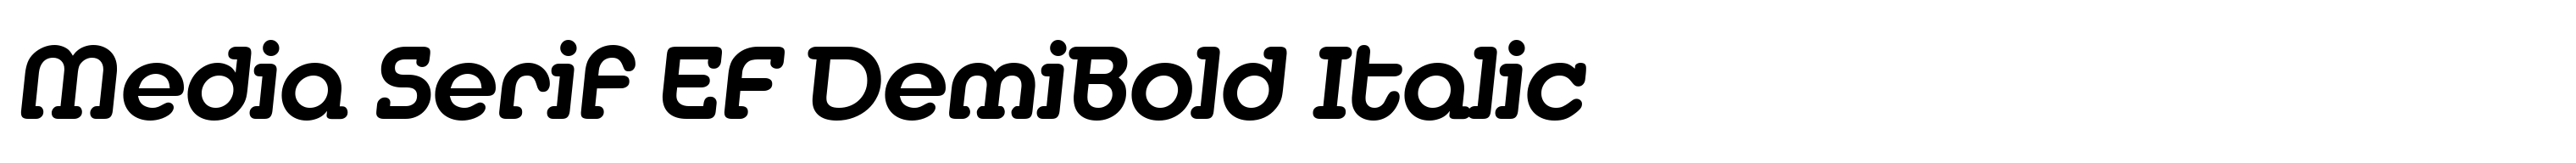 Media Serif EF DemiBold Italic